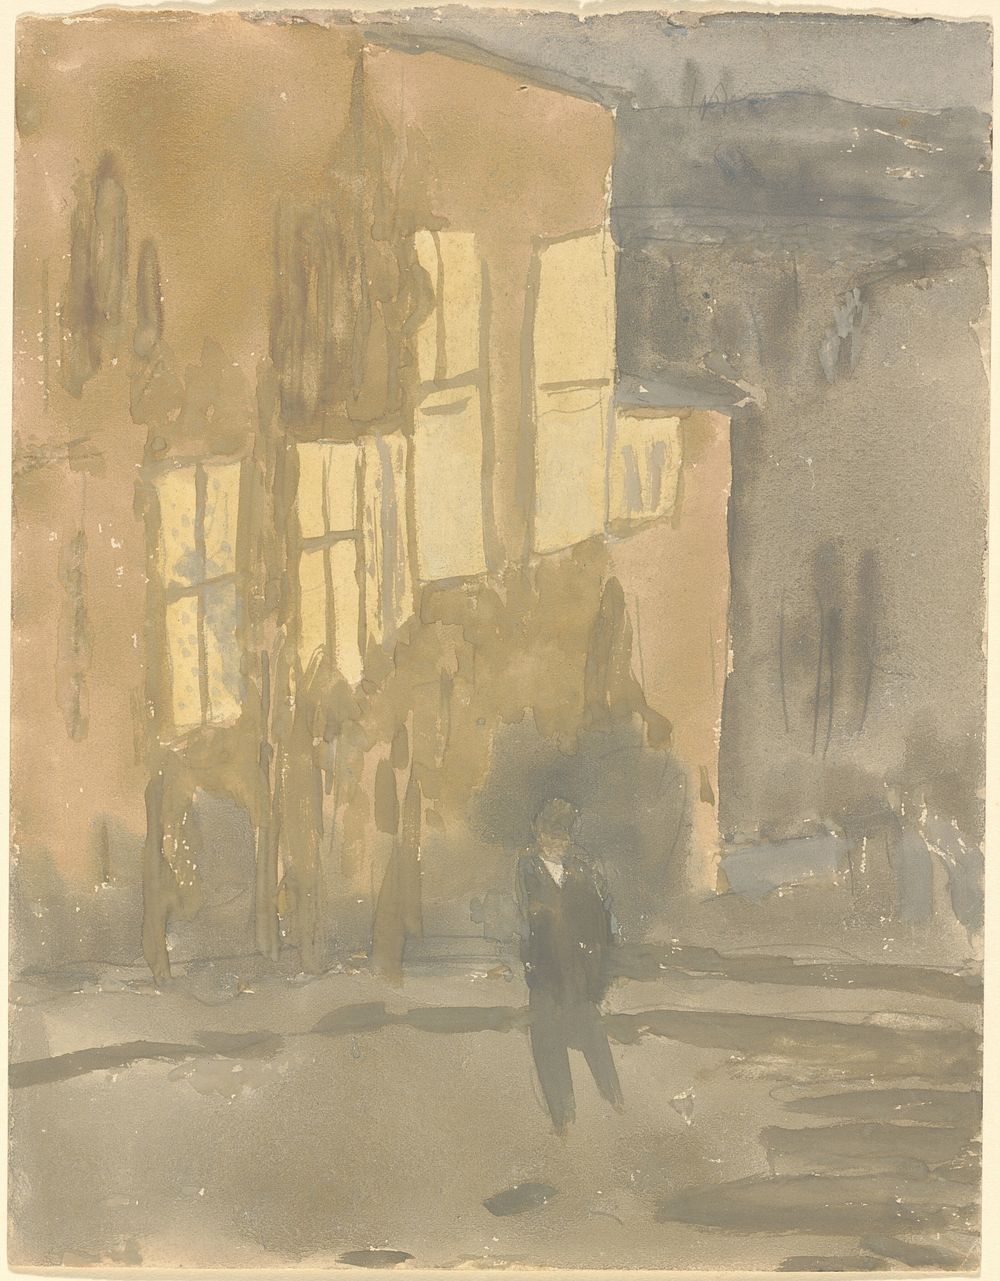 Street at Night, Meudon (1910s) by Gwen John.  